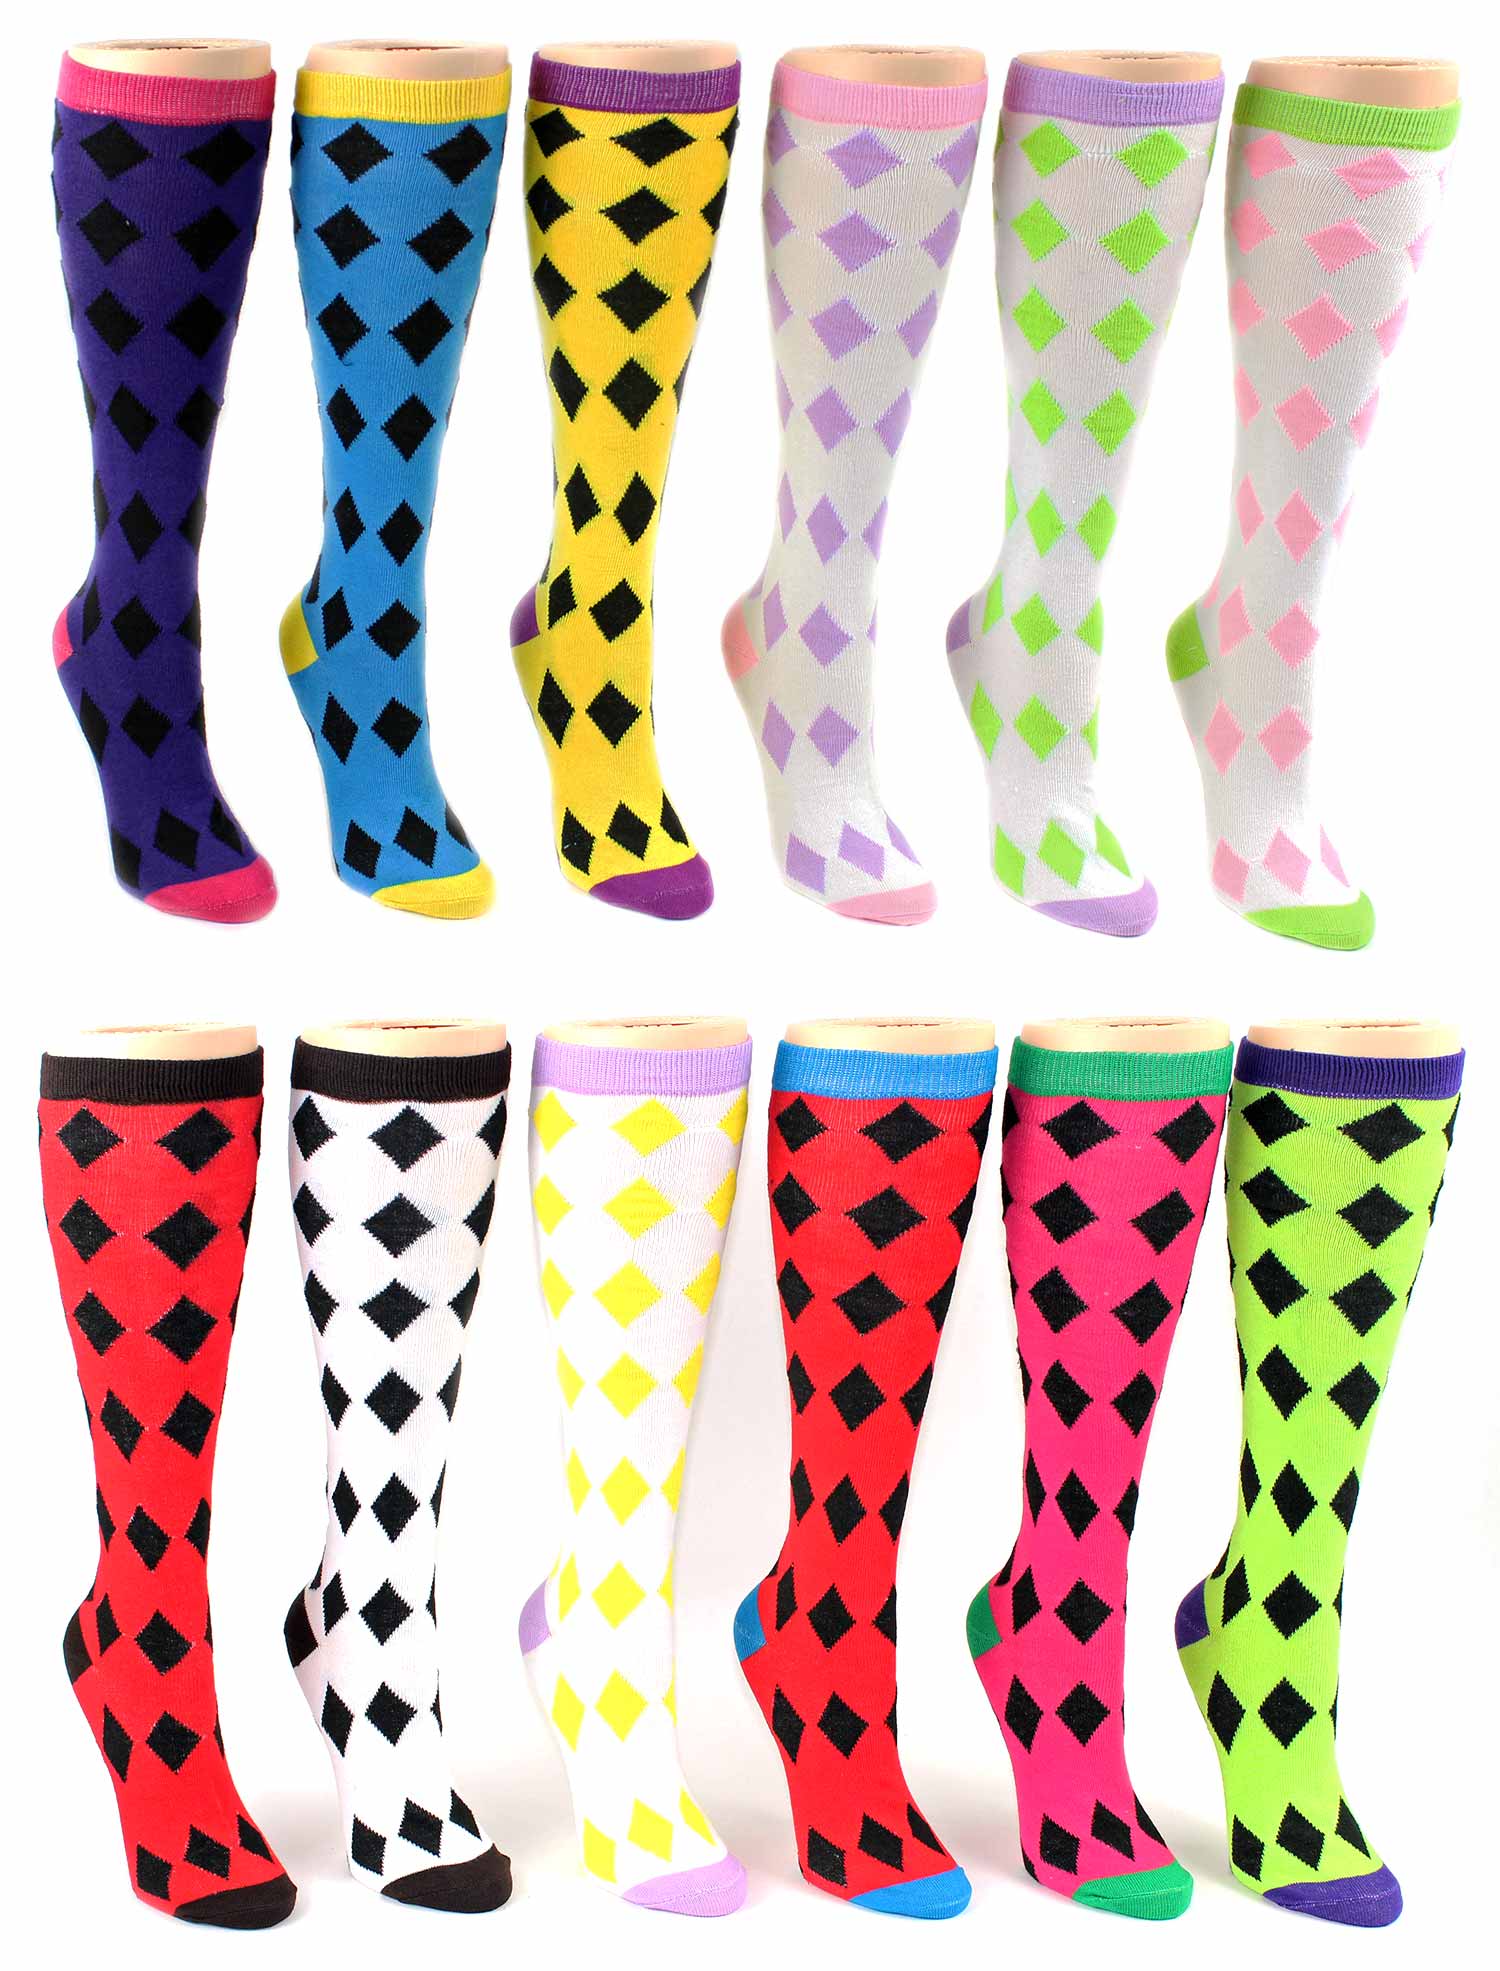 Women's Knee High Novelty Socks - DIAMOND Prints - Size 9-11